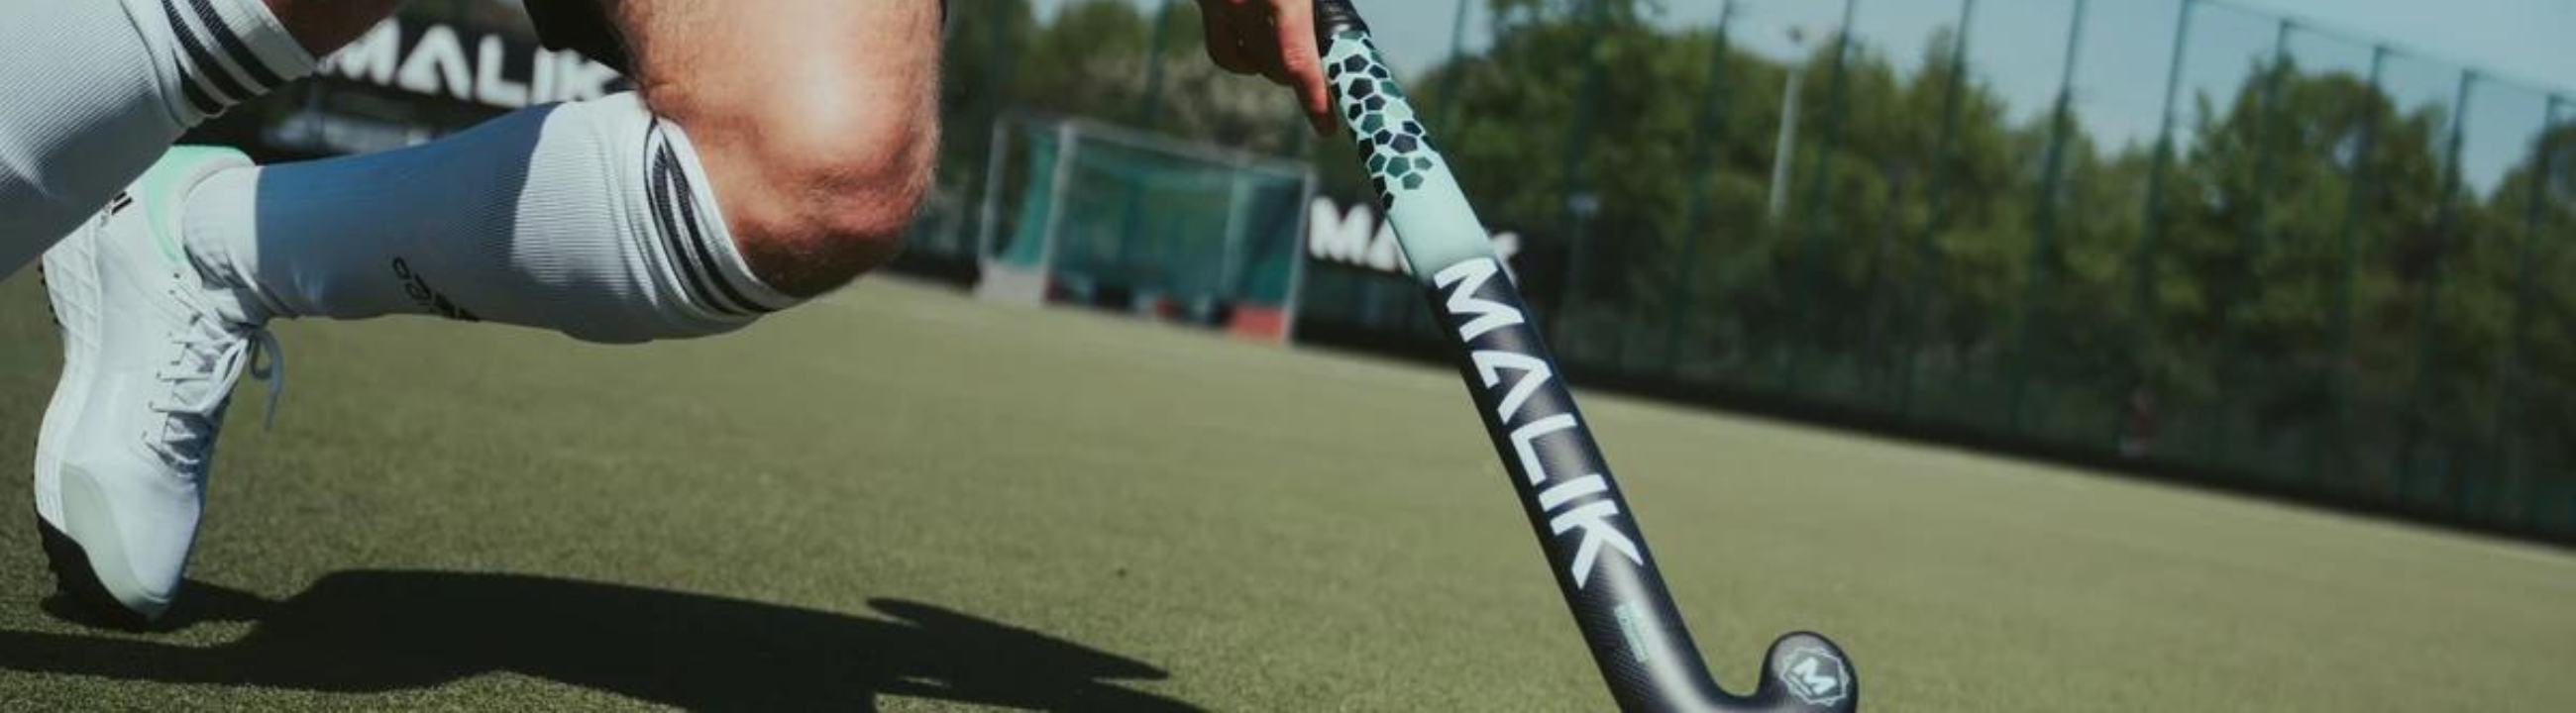 61% - 80% Carbon Hockey Sticks